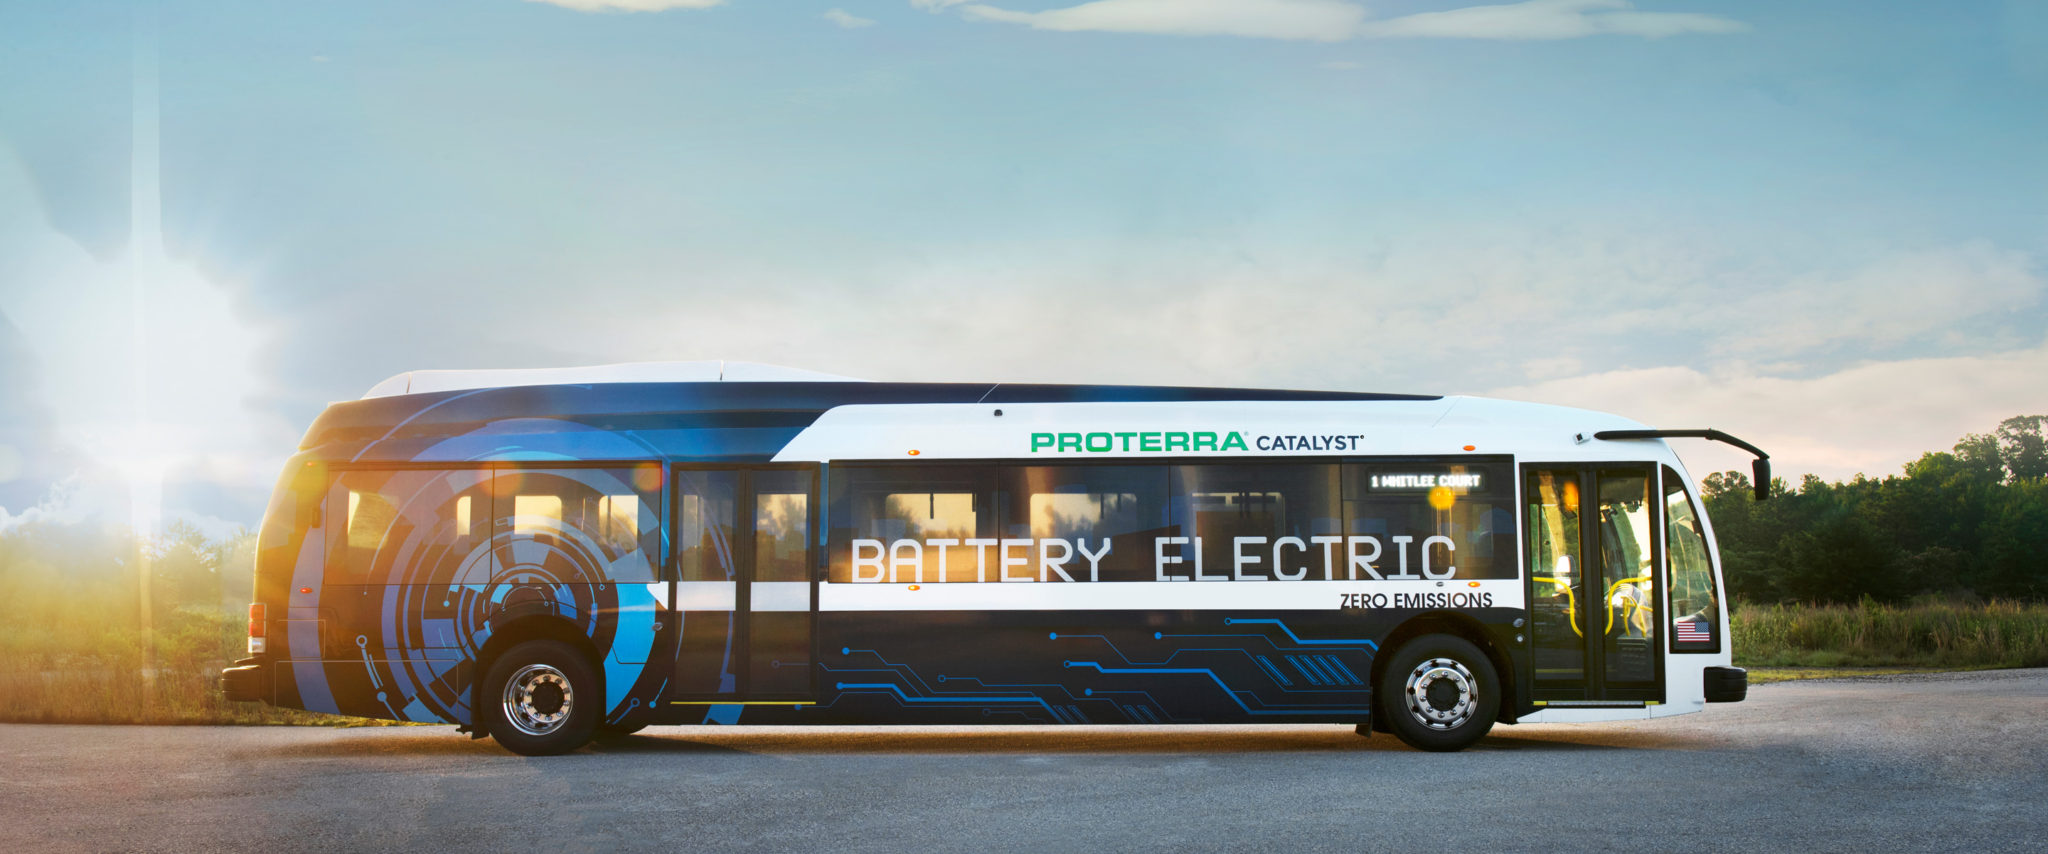 Proterra electric bus 